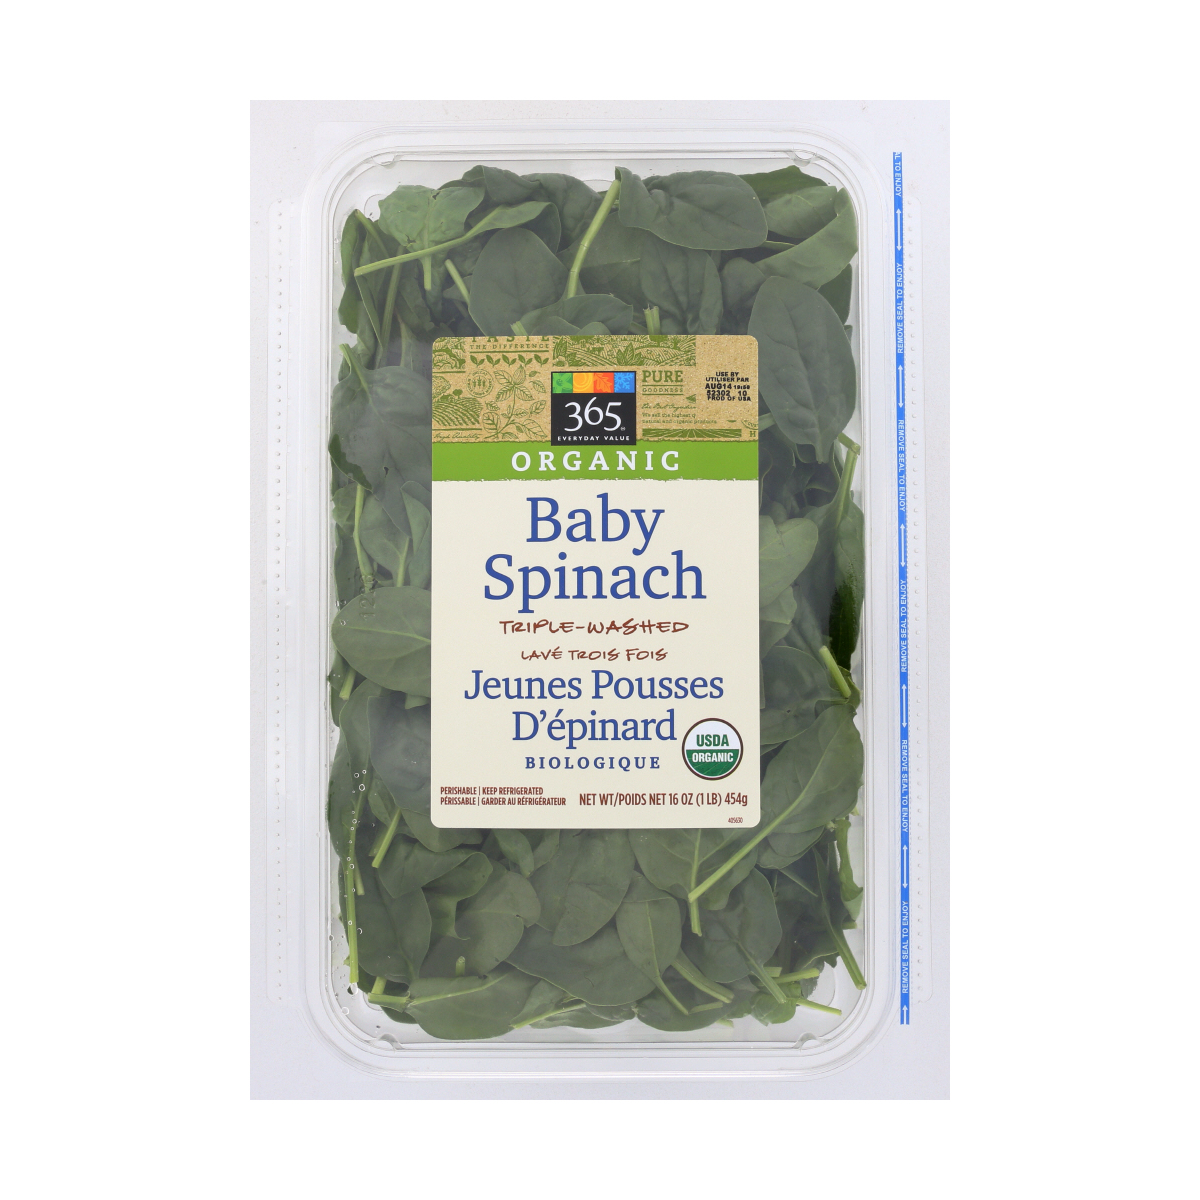 Organic Baby Spinach, 16 oz, 365 